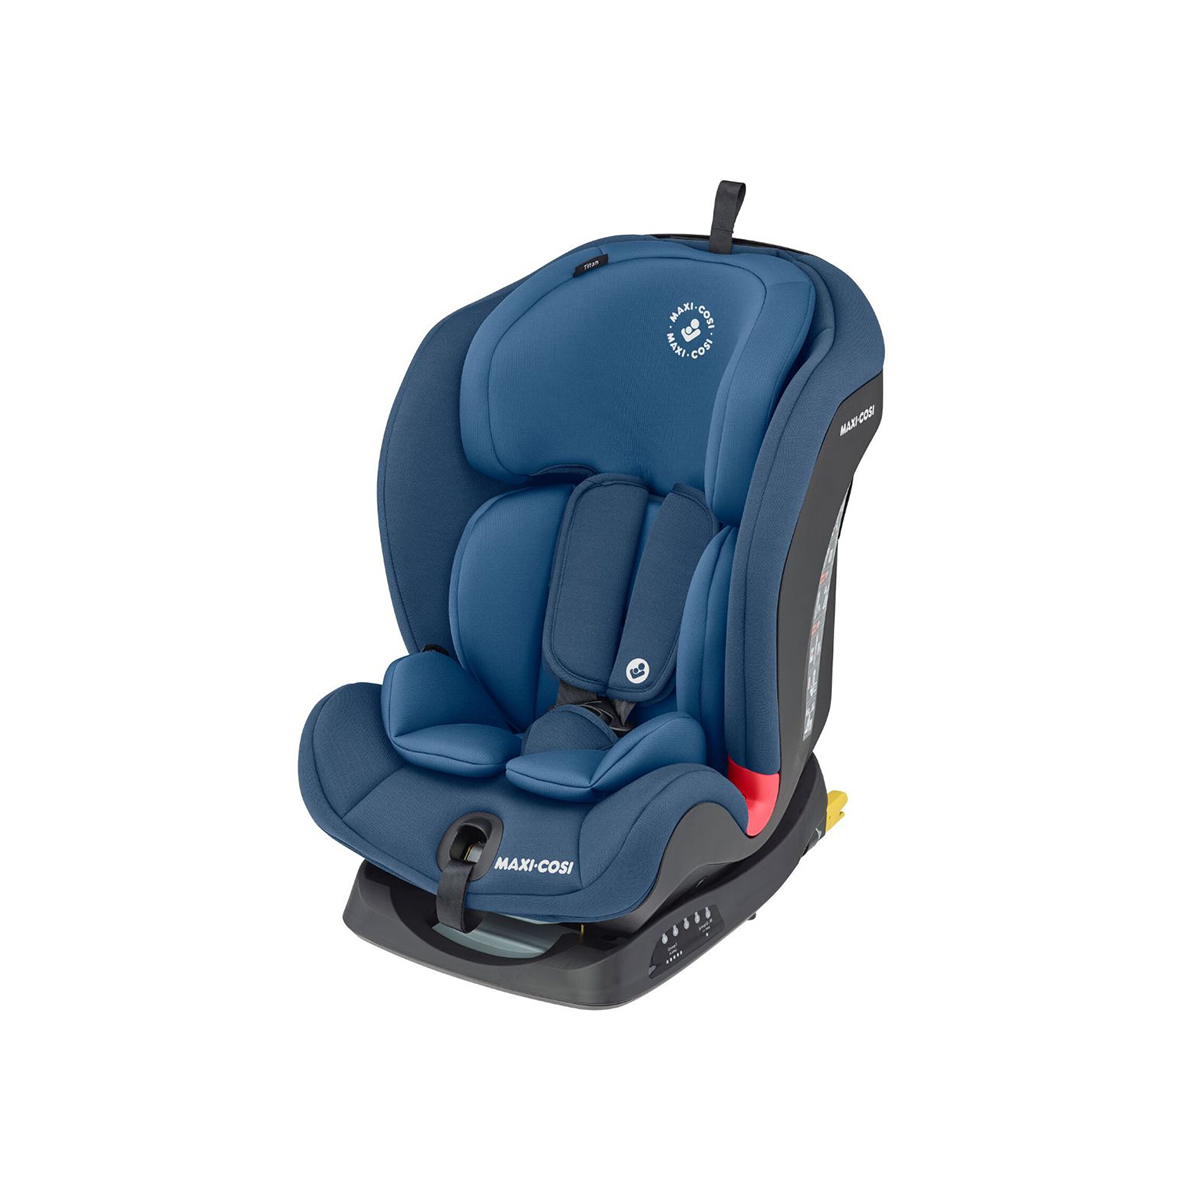 Scaun auto Maxi-Cosi Titan Basic Blue, 9 – 36 kg, Albastru MAXI COSI